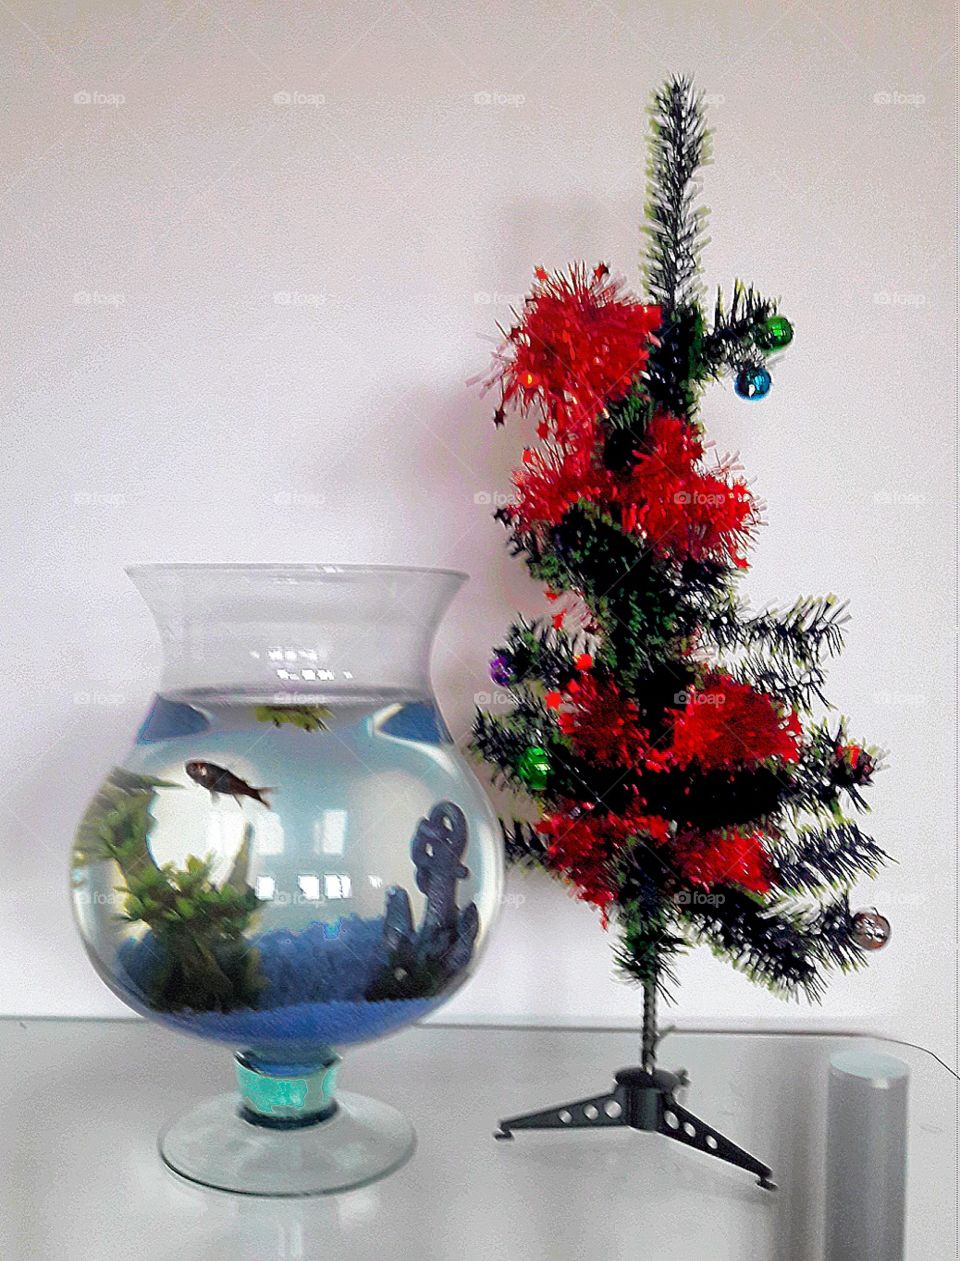 Gray's Christmas tree